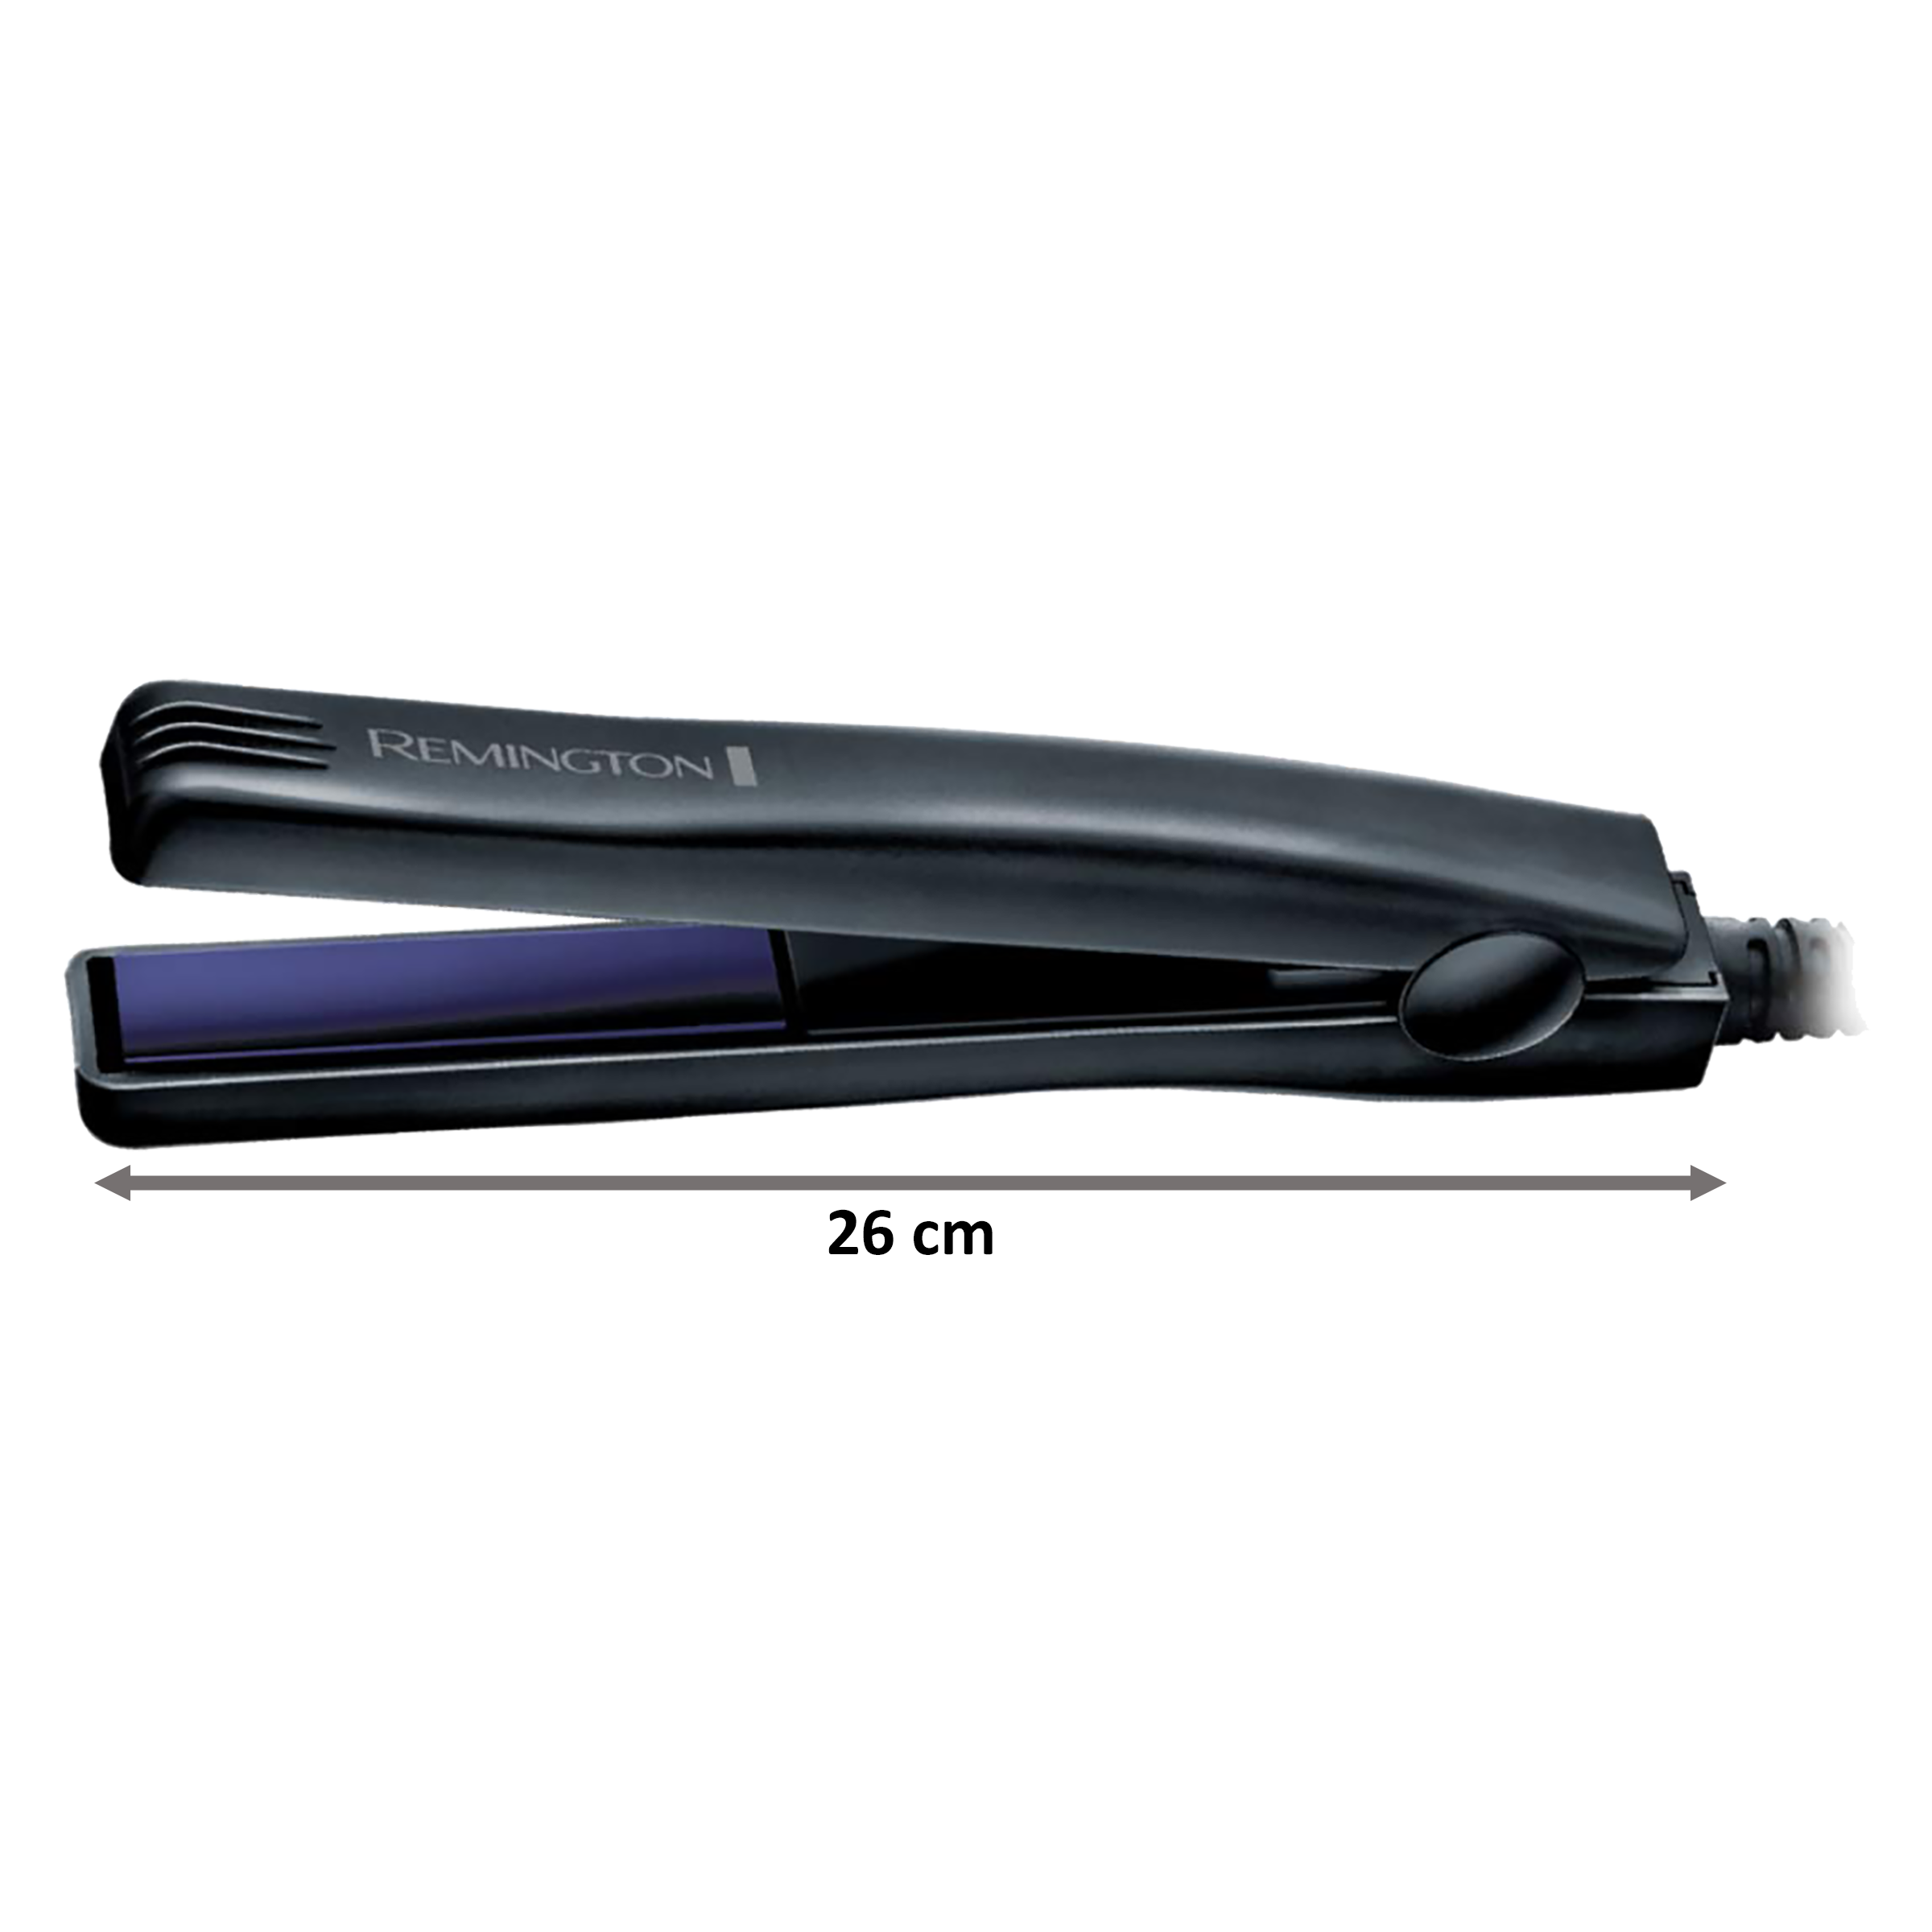 Buy Remington Corded Hair Straightener (S2880, Black) Online - Croma